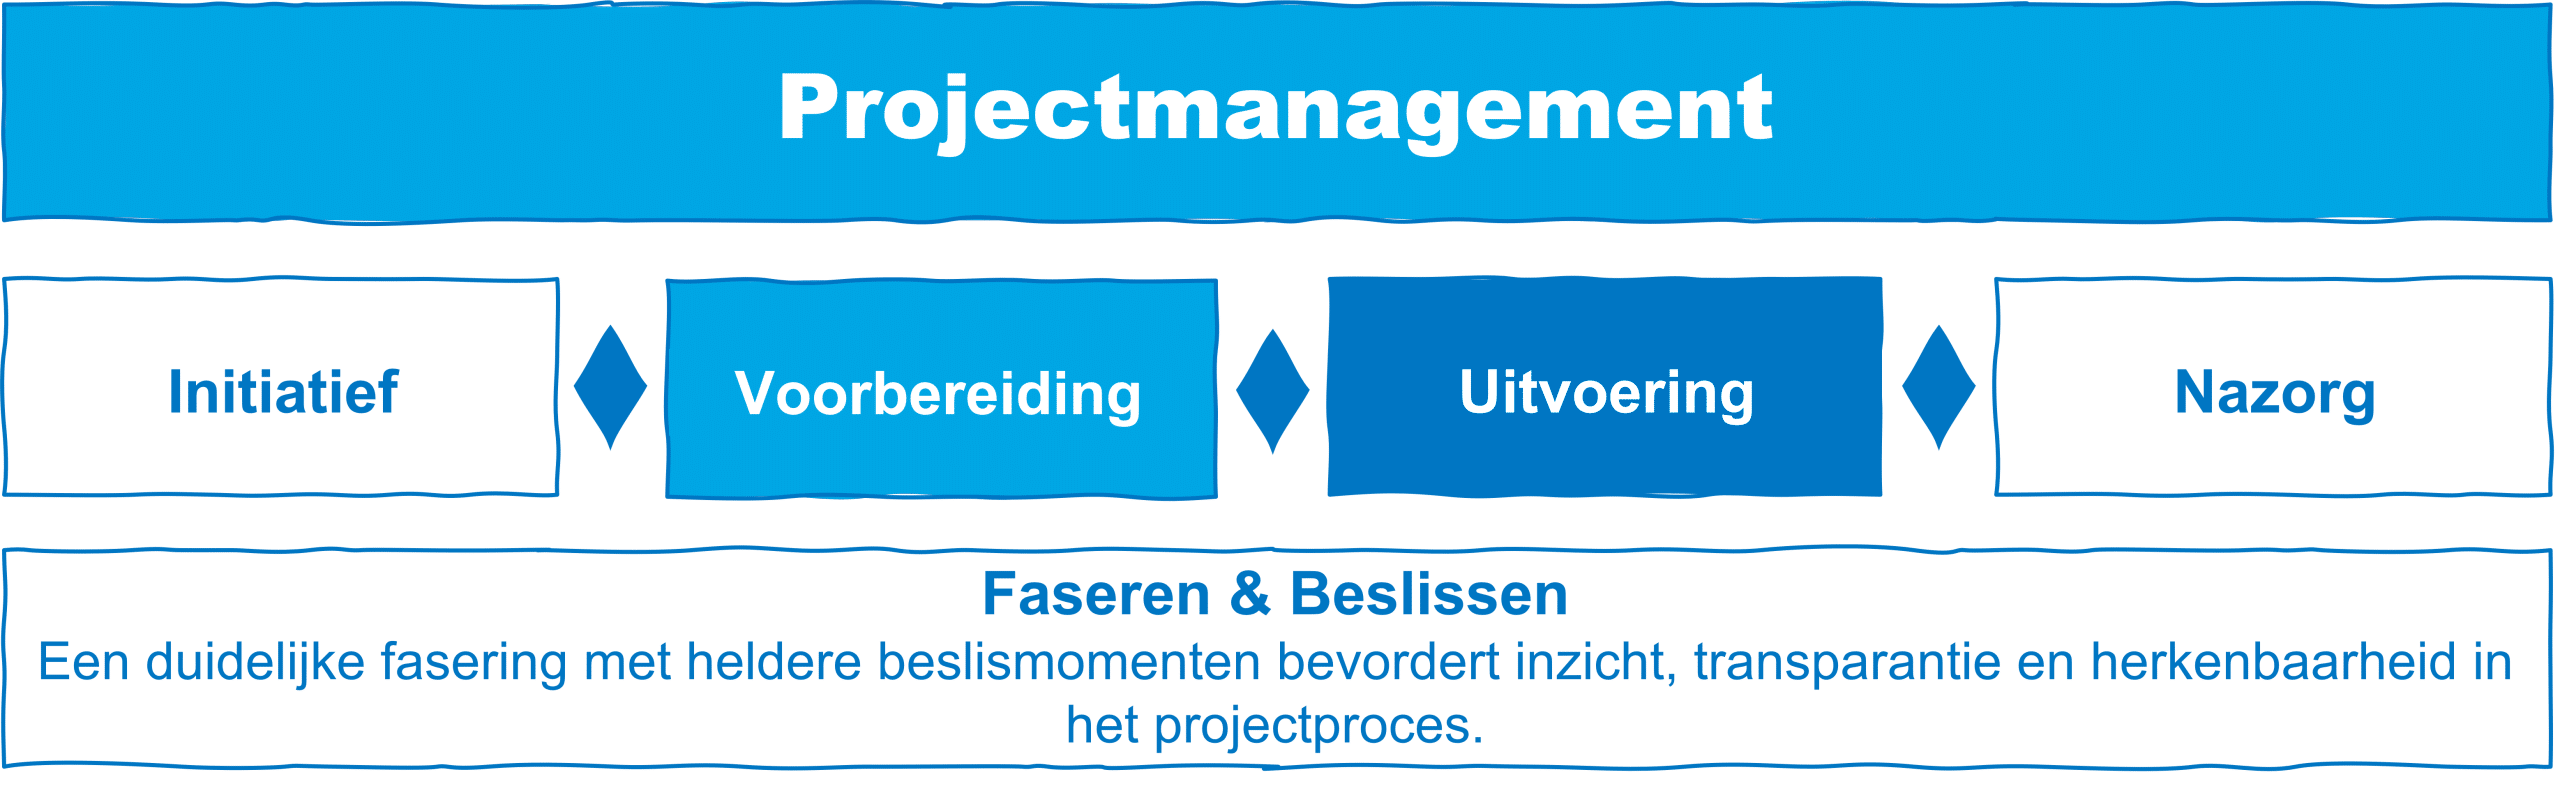 igib_projectmanagement